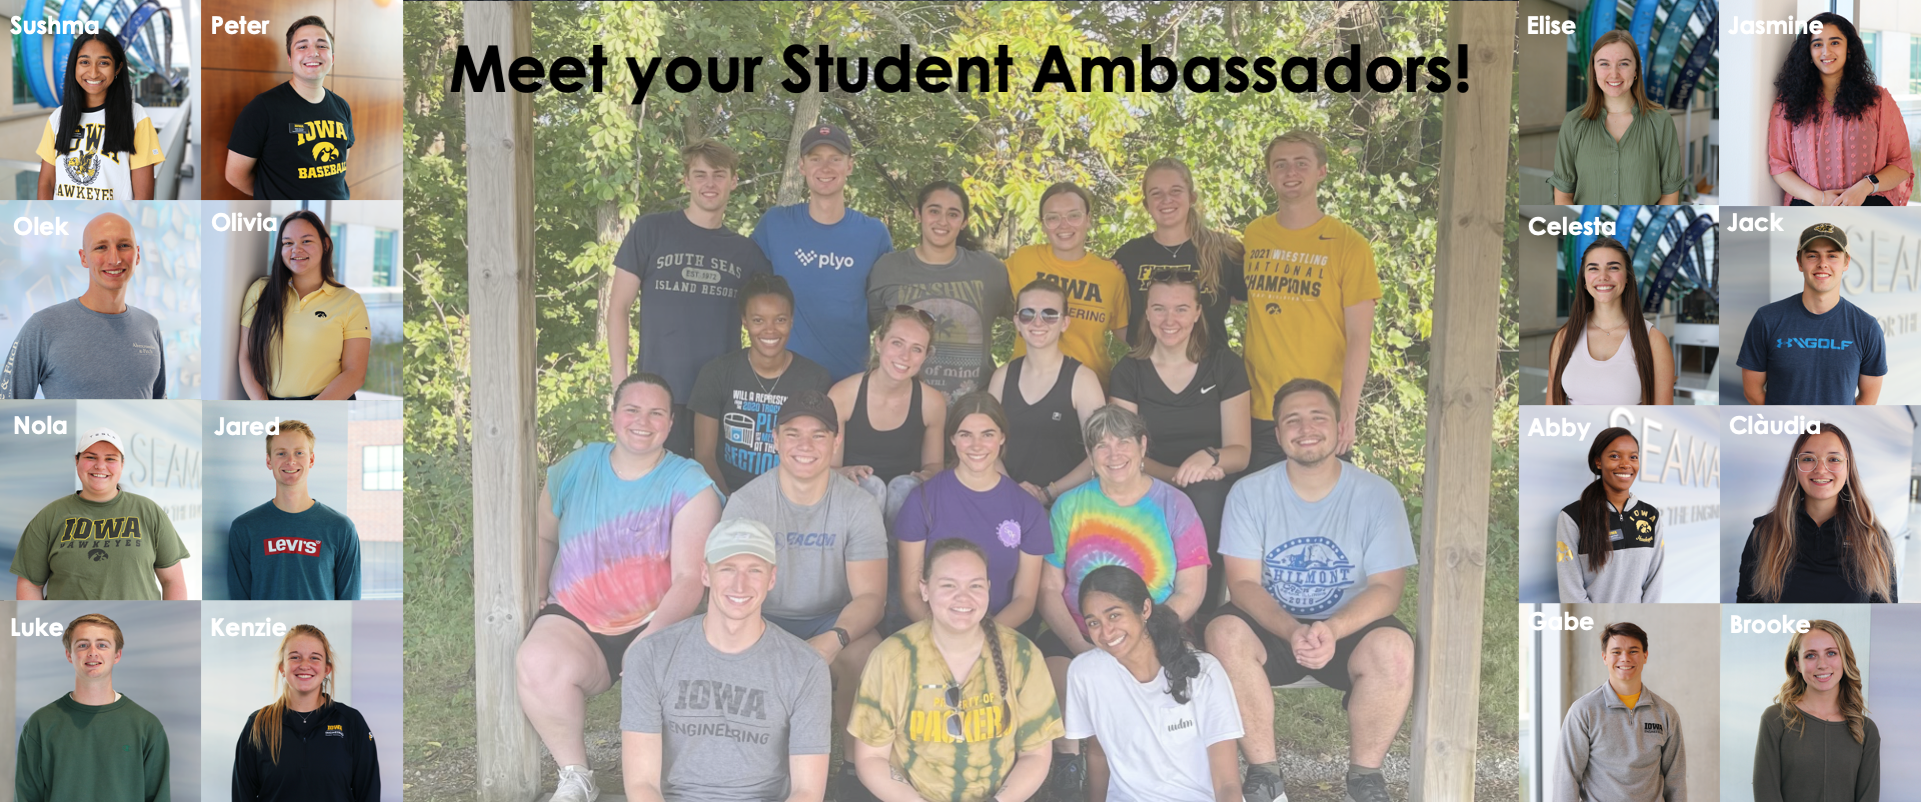 Meet your Student Ambassadors!